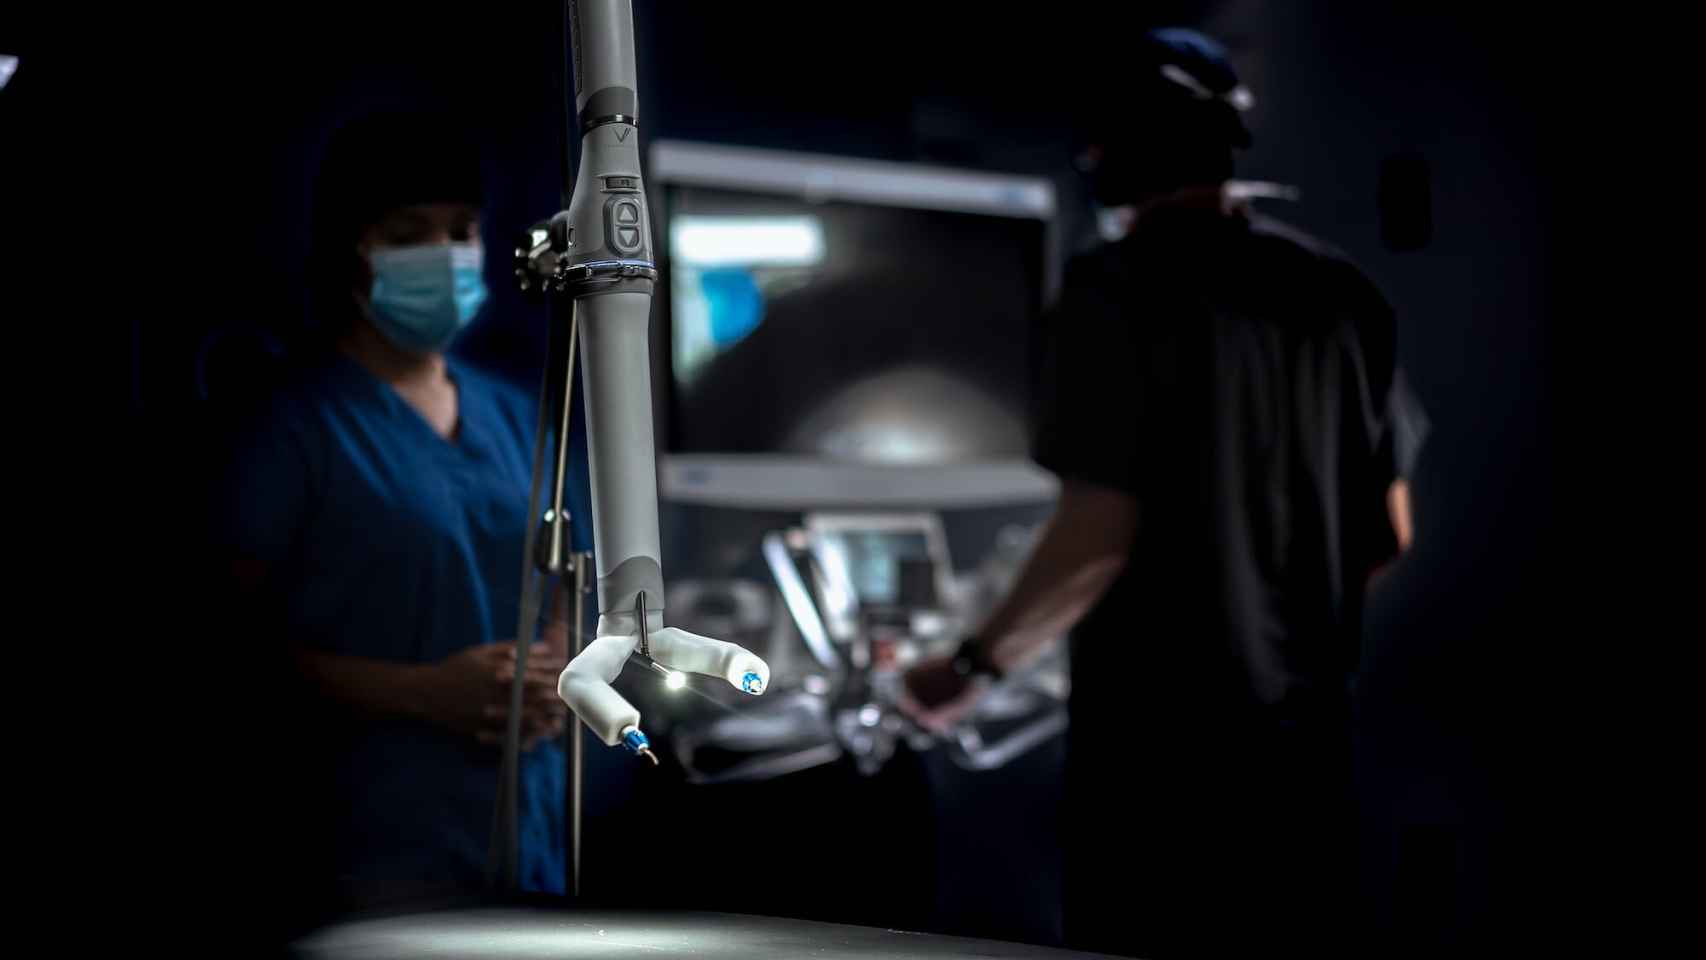 Look, surgeon robot!